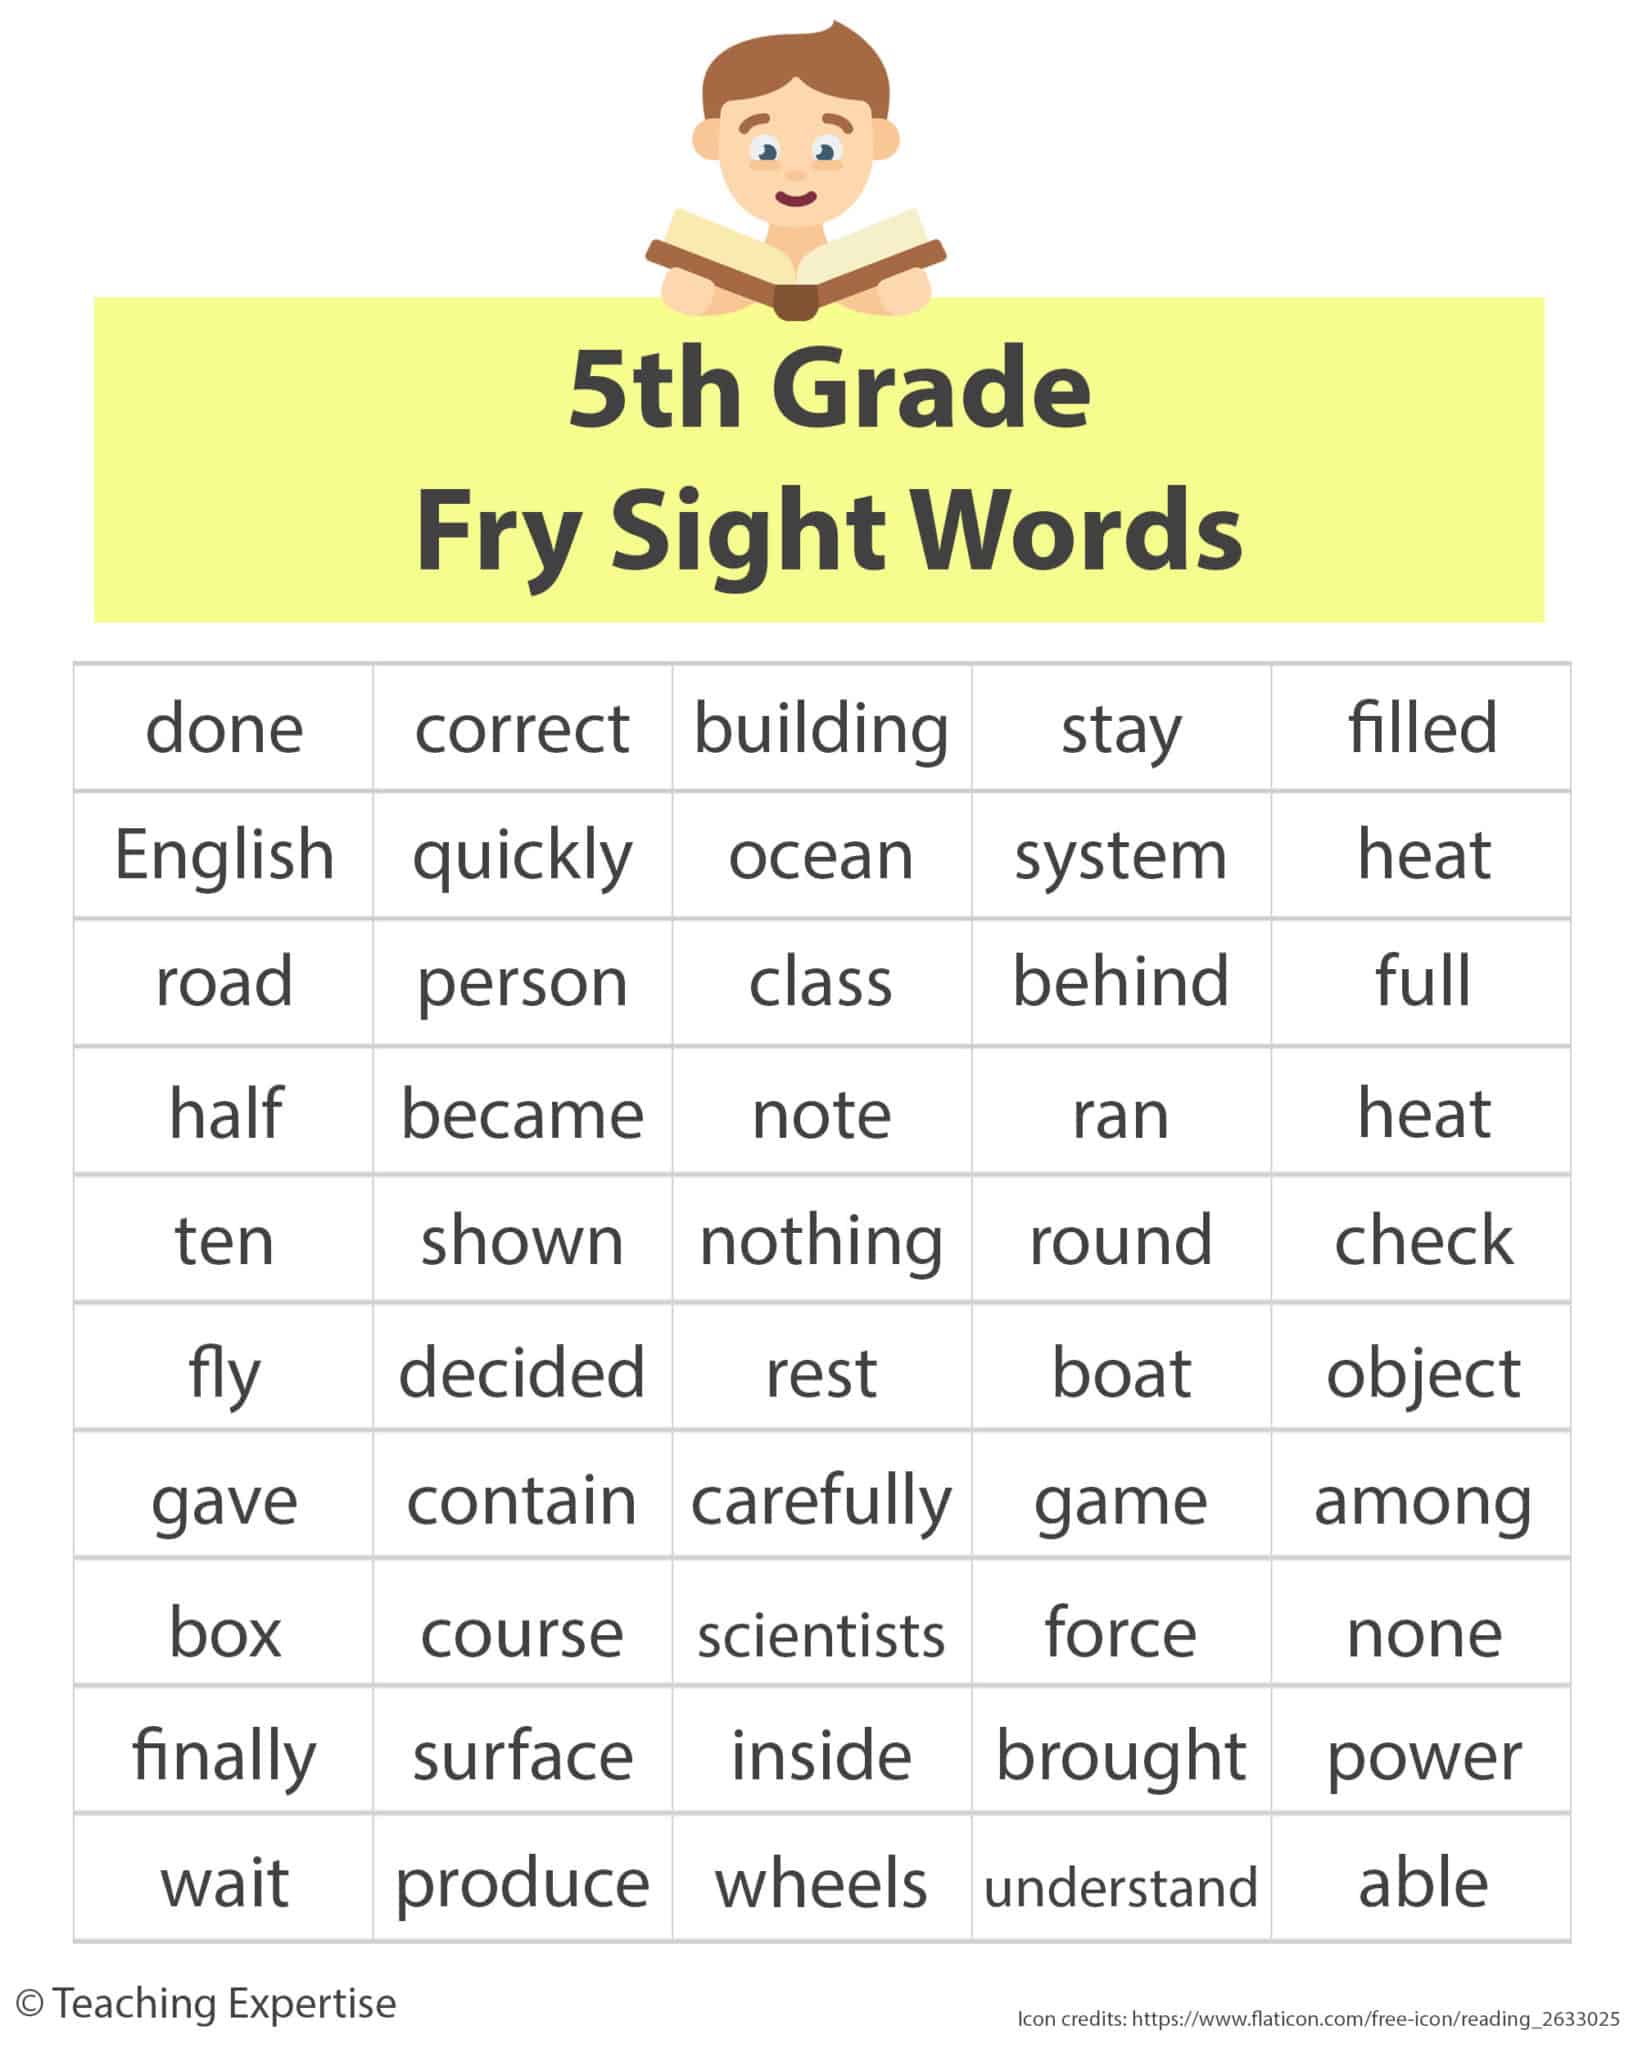 100 Sight Words For Fluent 5th Grade Readers Teaching Expertise